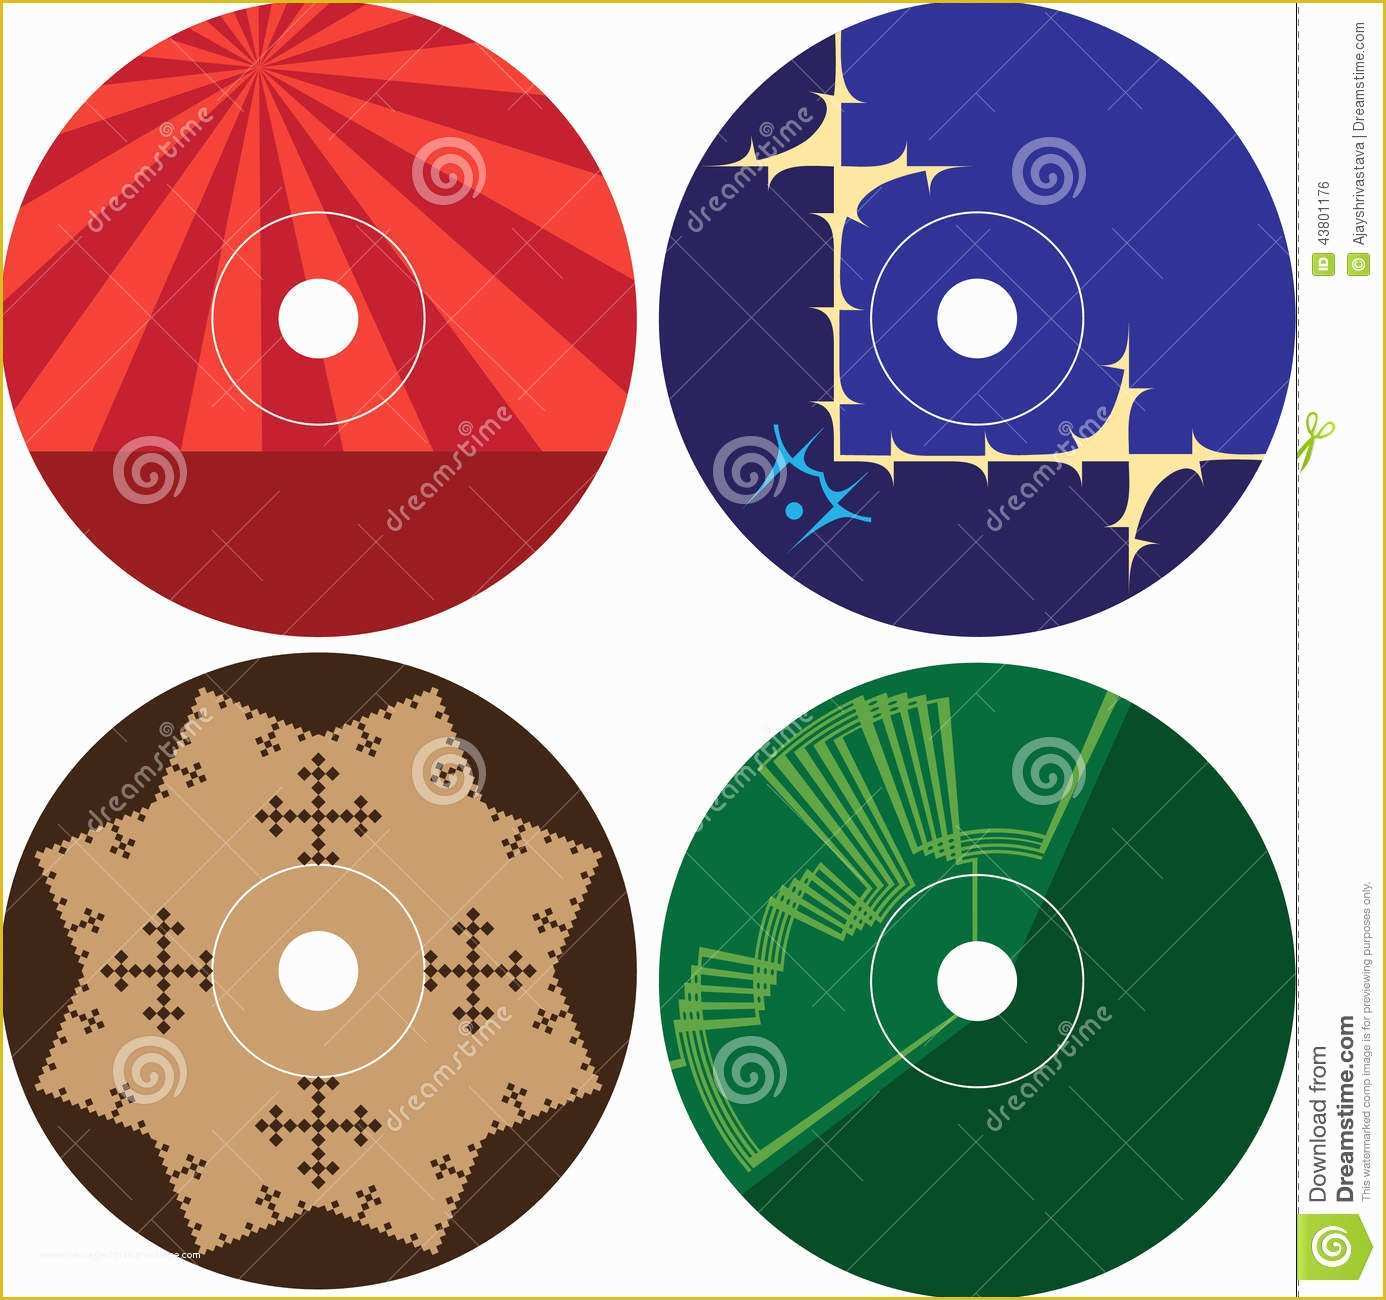 Free Cd Label Design Templates Of Cd Dvd Label Design Template Stock Vector Illustration